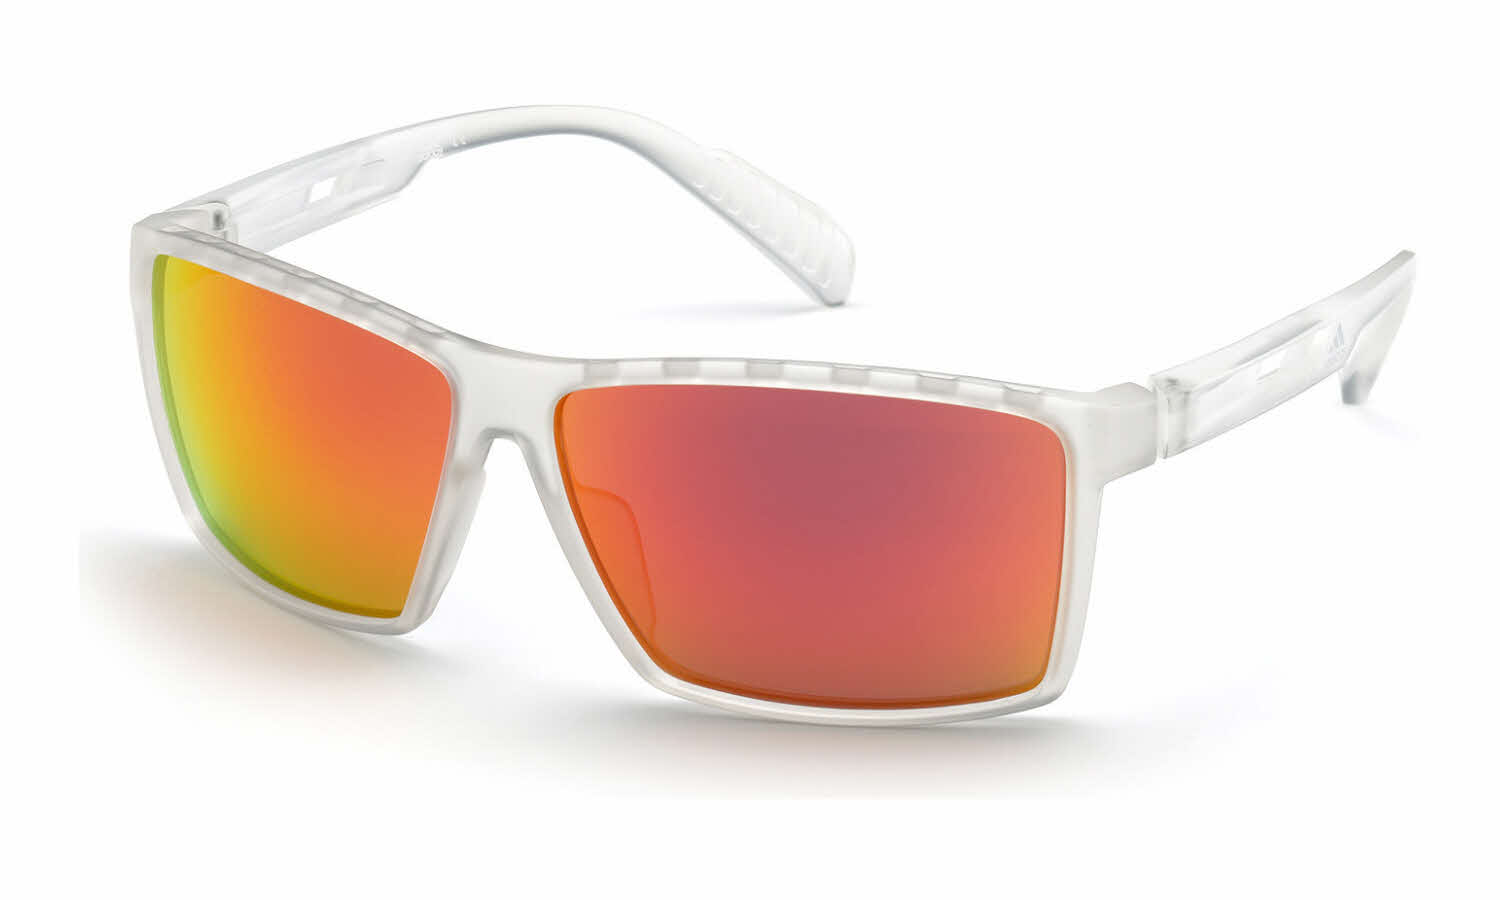 Adidas SP0010 Sunglasses